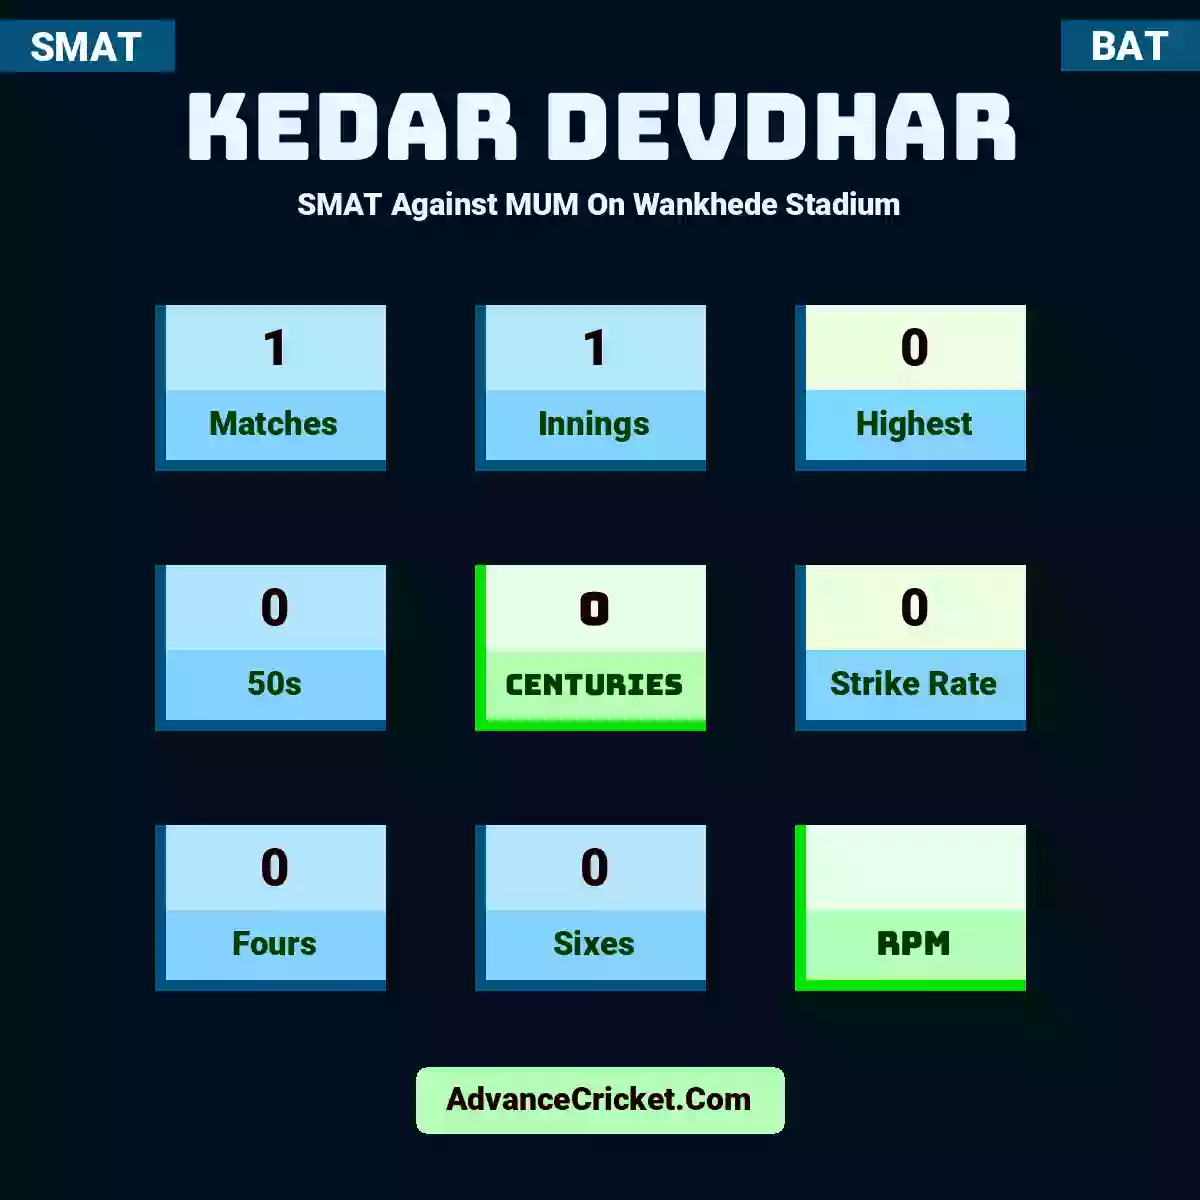 Kedar Devdhar SMAT  Against MUM On Wankhede Stadium, Kedar Devdhar played 1 matches, scored 0 runs as highest, 0 half-centuries, and 0 centuries, with a strike rate of 0. K.Devdhar hit 0 fours and 0 sixes.